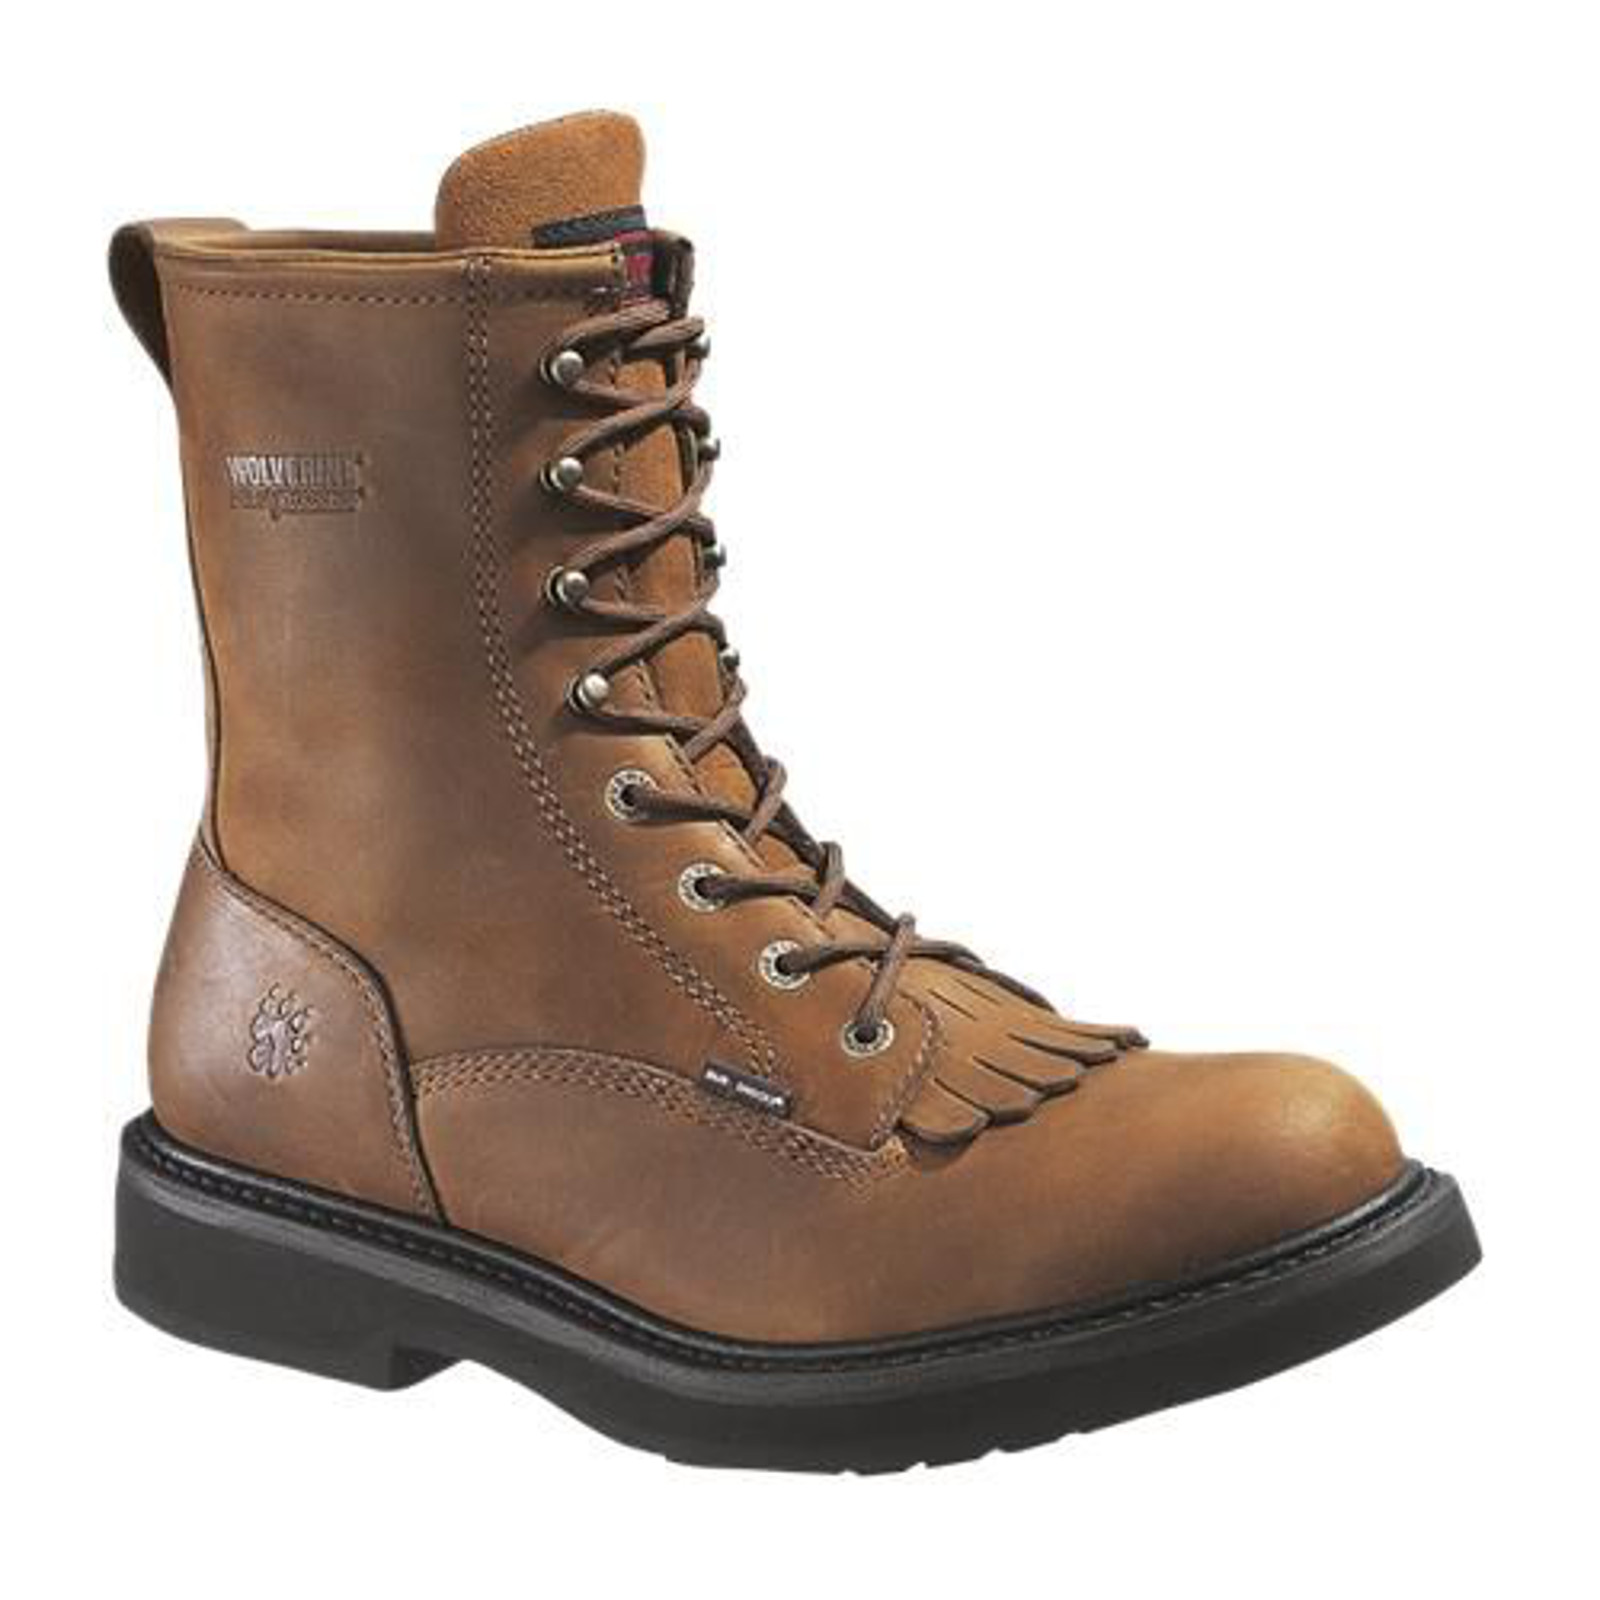 UPC 098776023408 product image for Men's Ingham Kiltie DuraShocks Brown Leather Steel-Toe Work Boots | upcitemdb.com